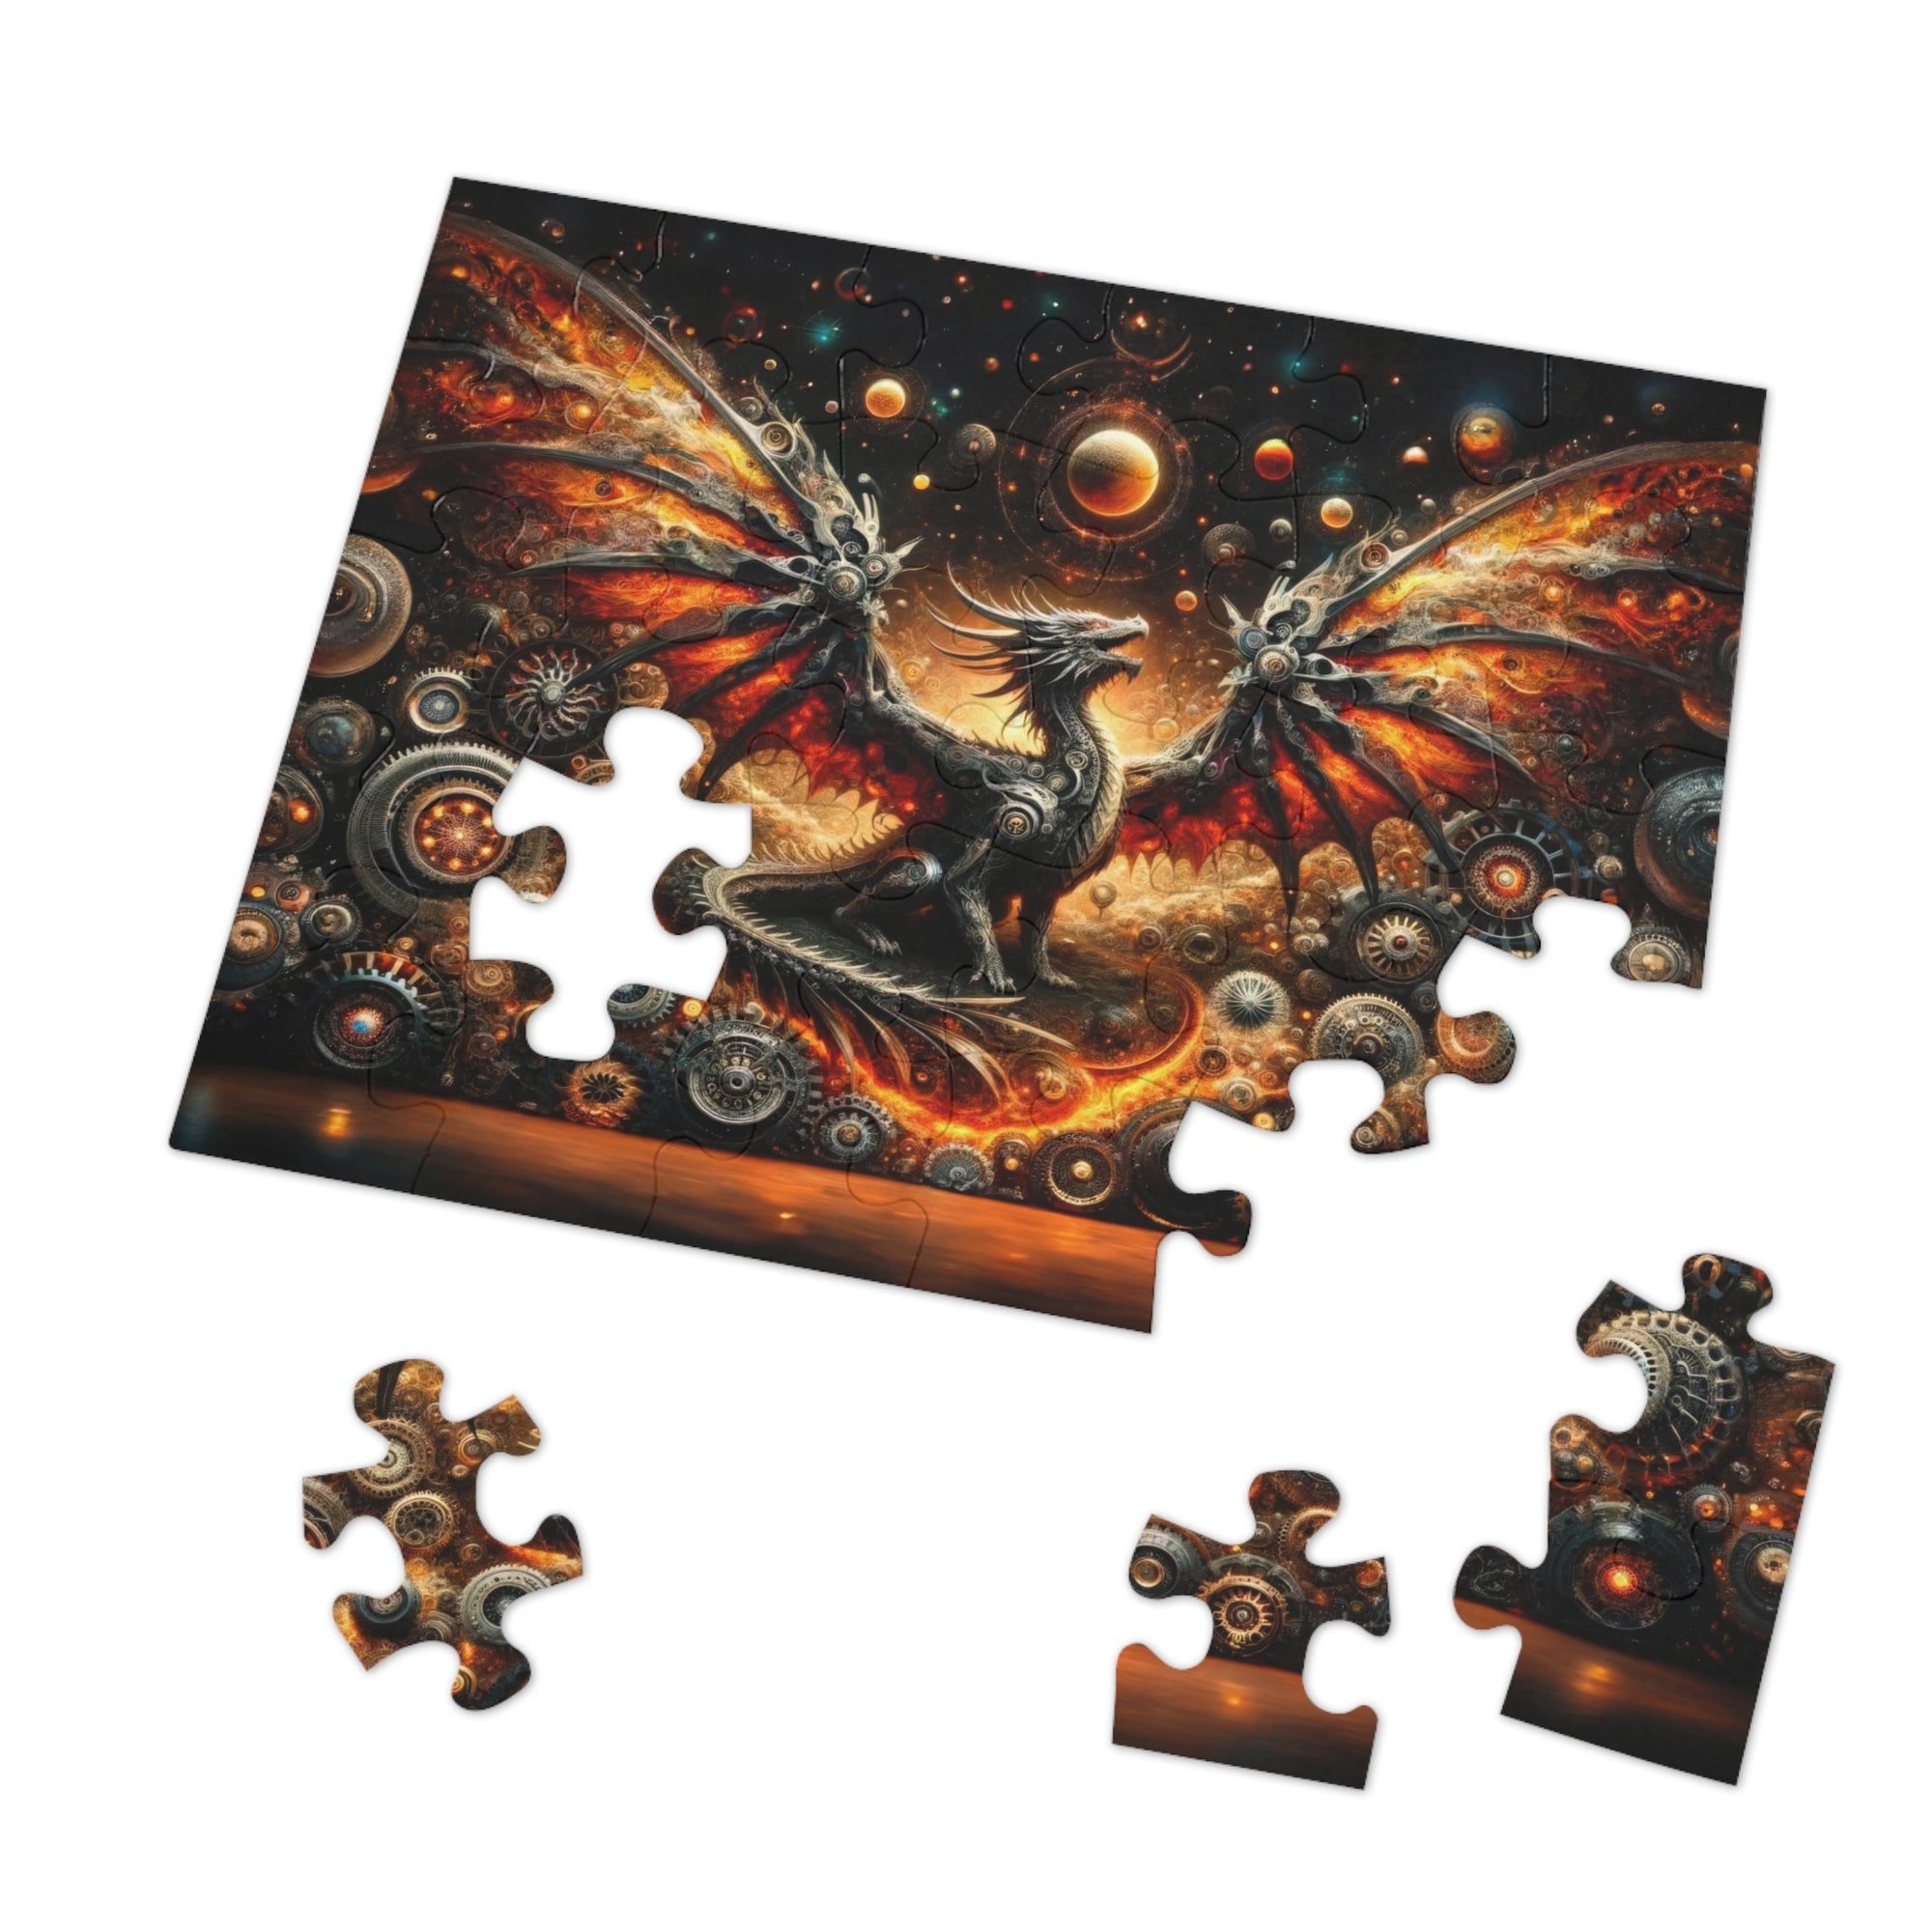 The Automaton Dragon Jigsaw Puzzle